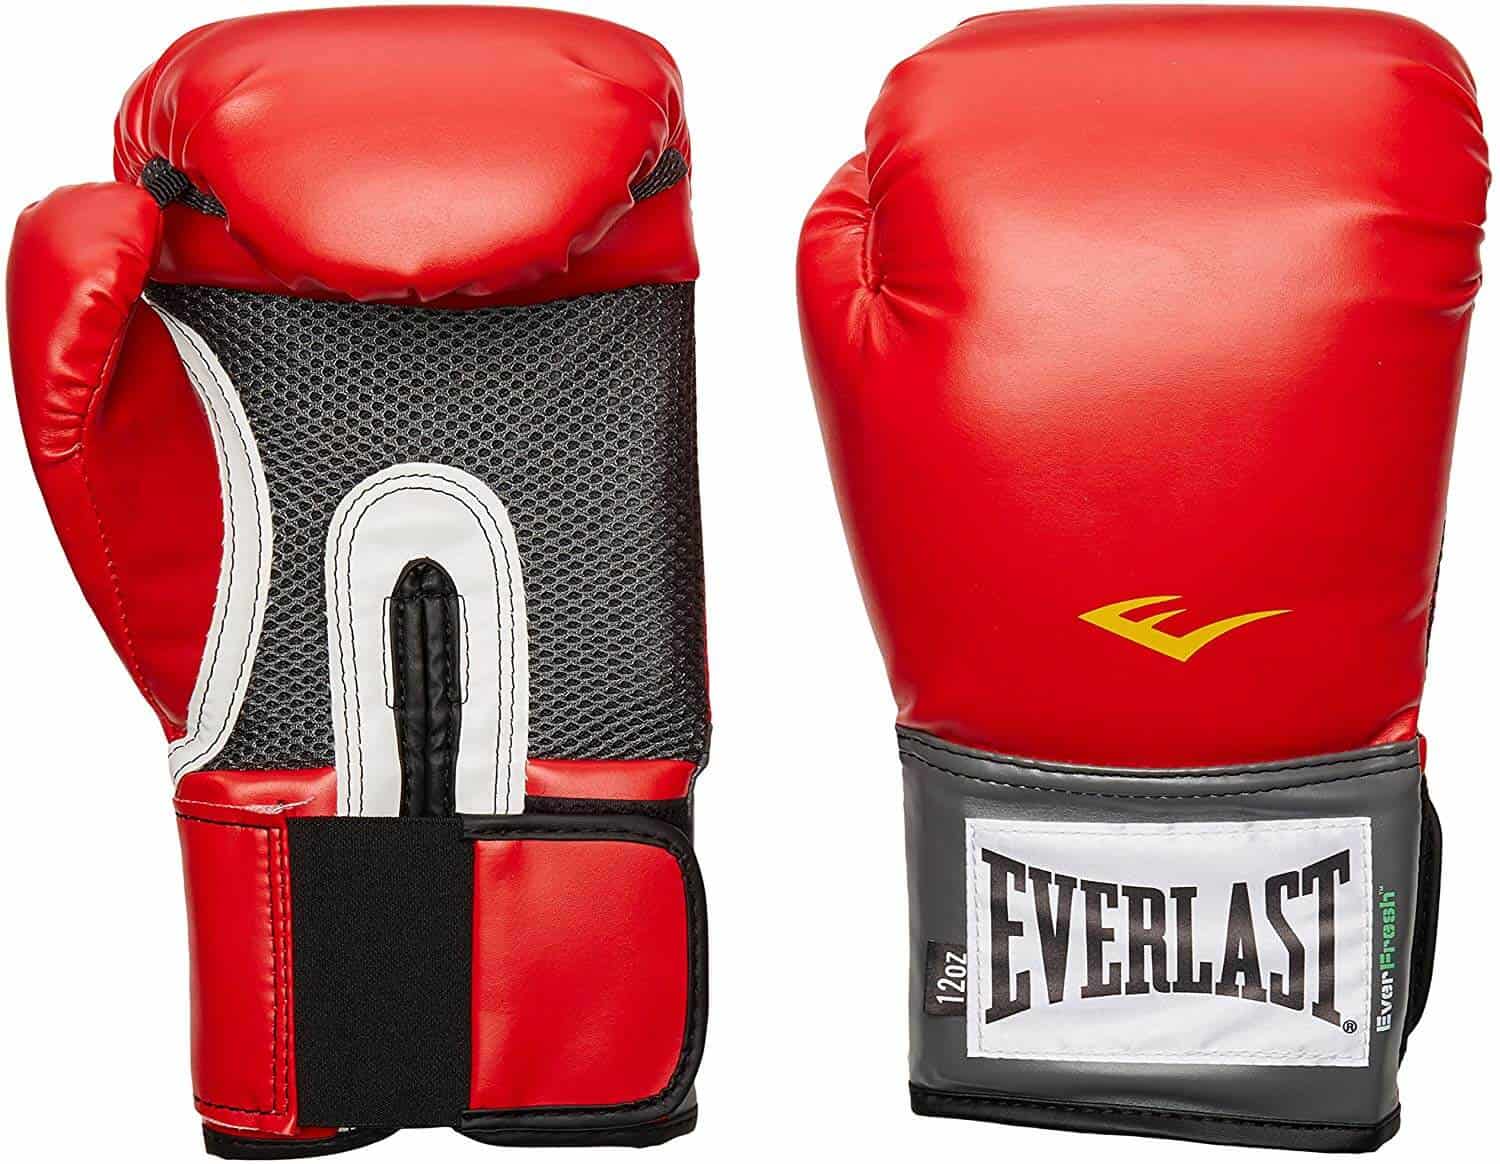 5 Best Boxing Gloves To Buy In Australia For 2020